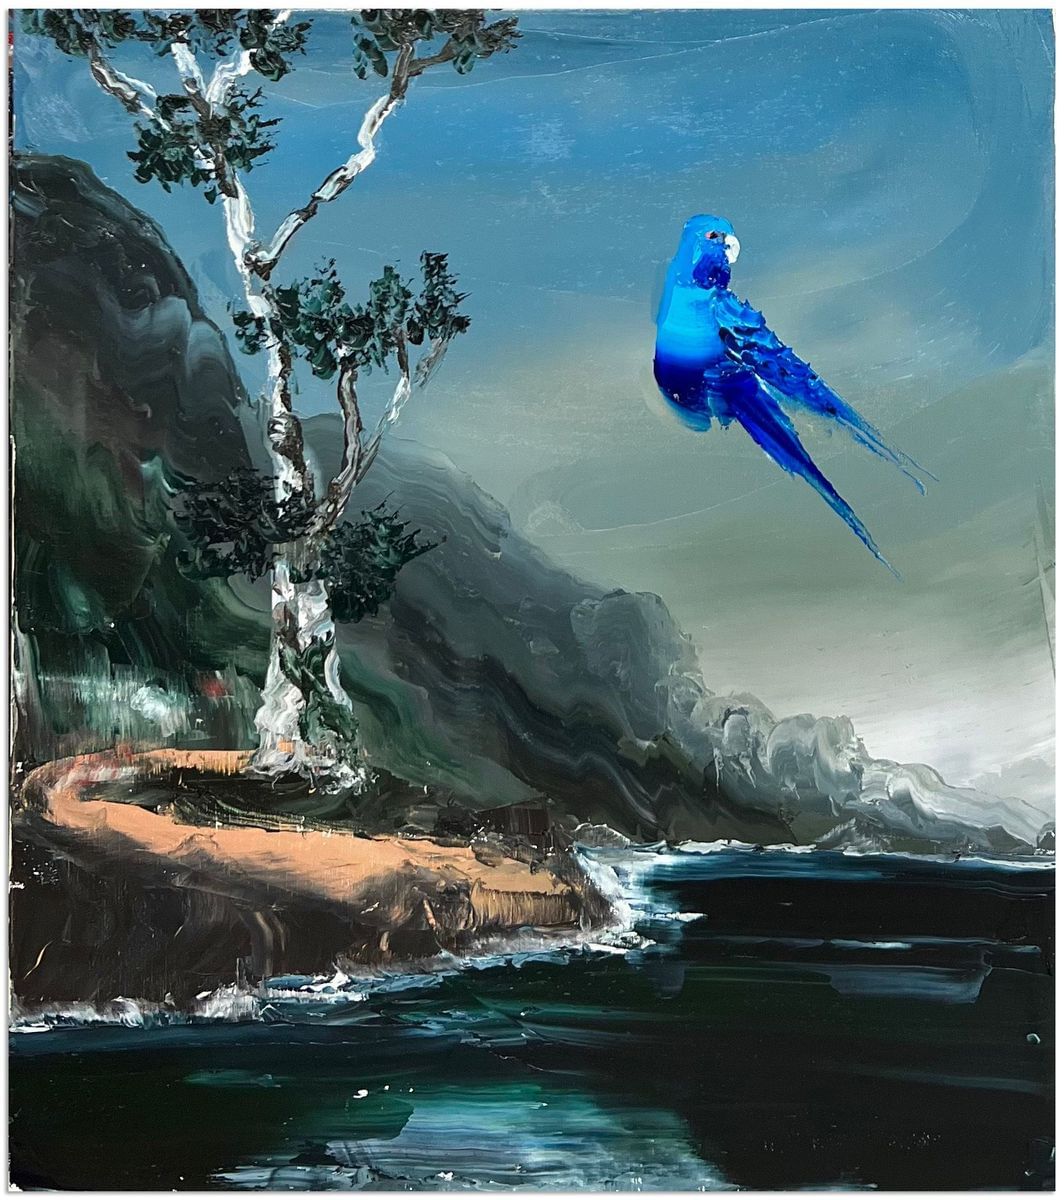 The Blue Bird of Wombarra by Paul Ryan